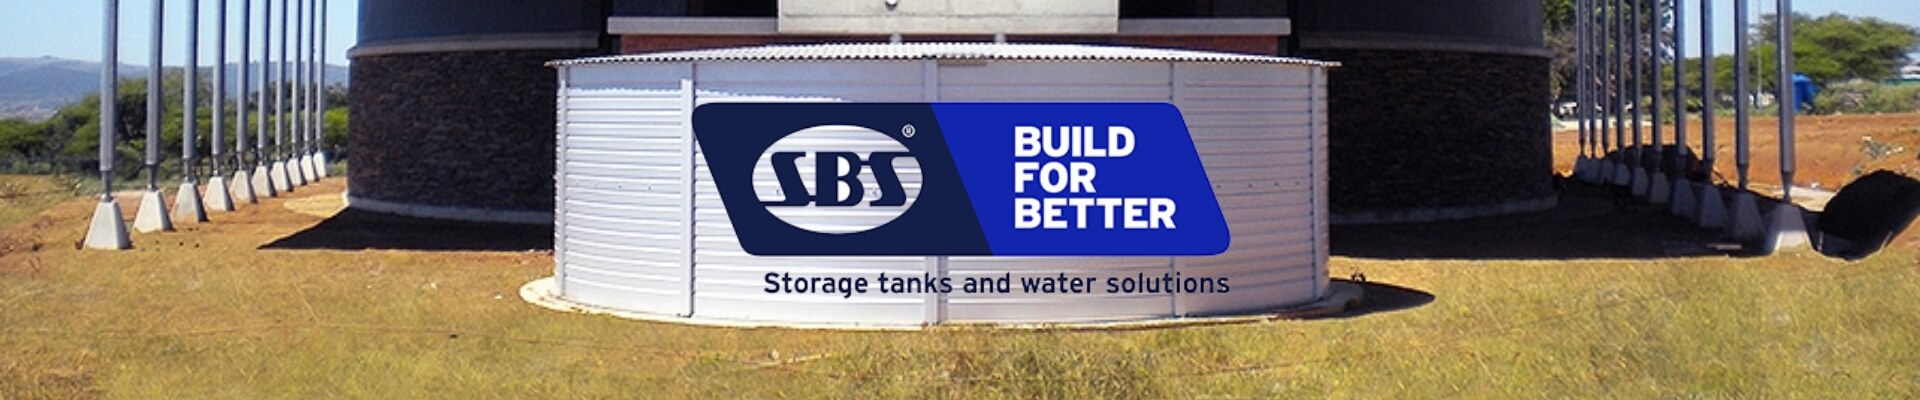 SBS – Your Premium Water Storage Partner in Malawi